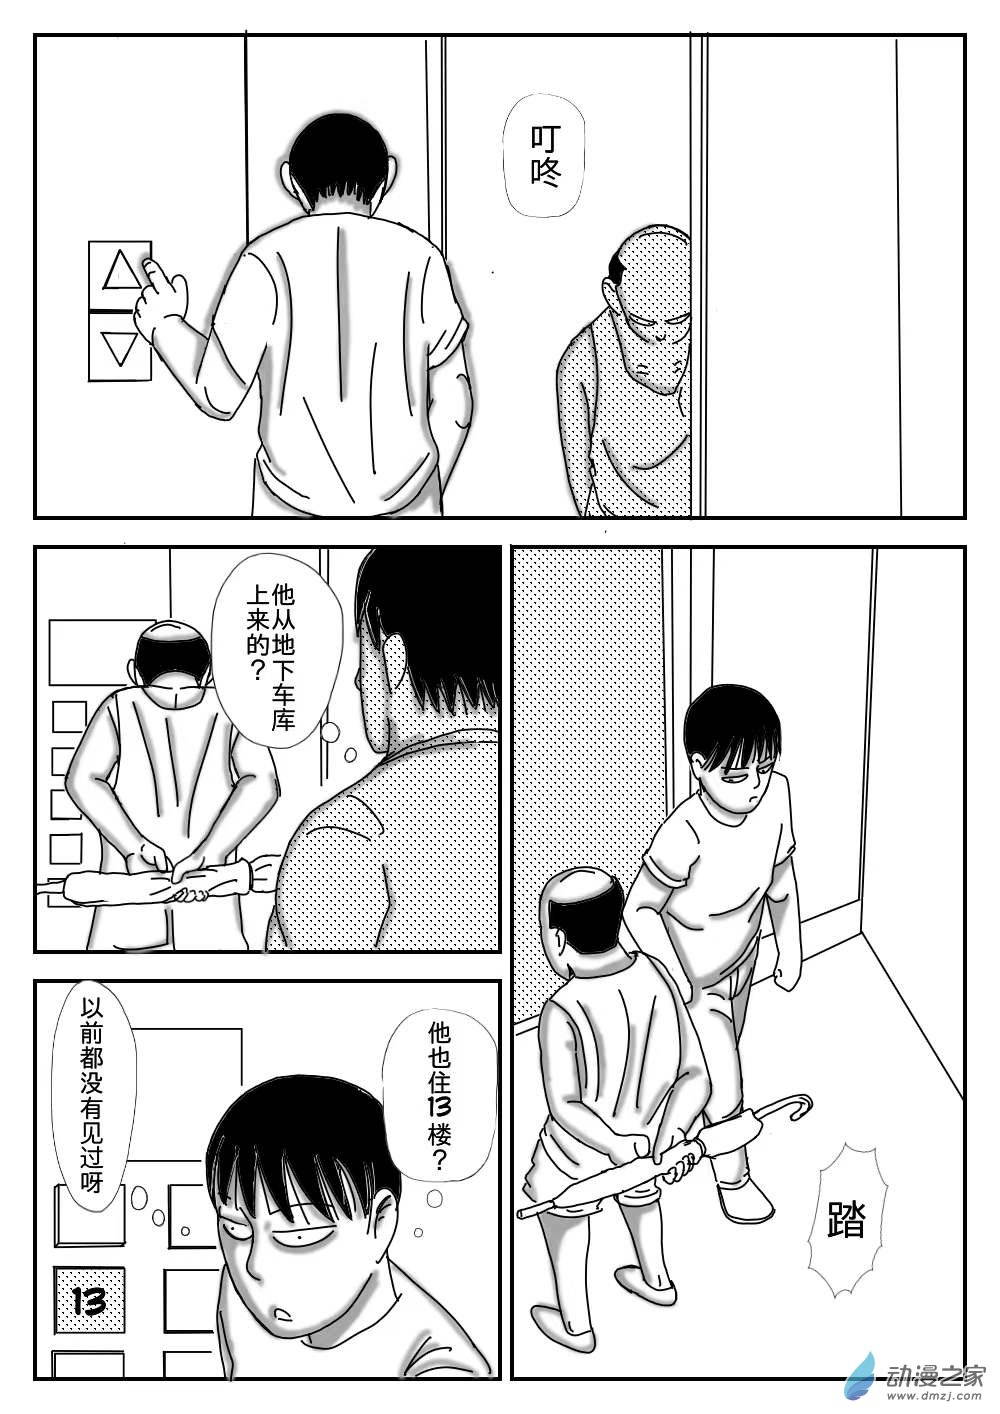 K神的短篇漫畫集 - 02 道格先生 - 1